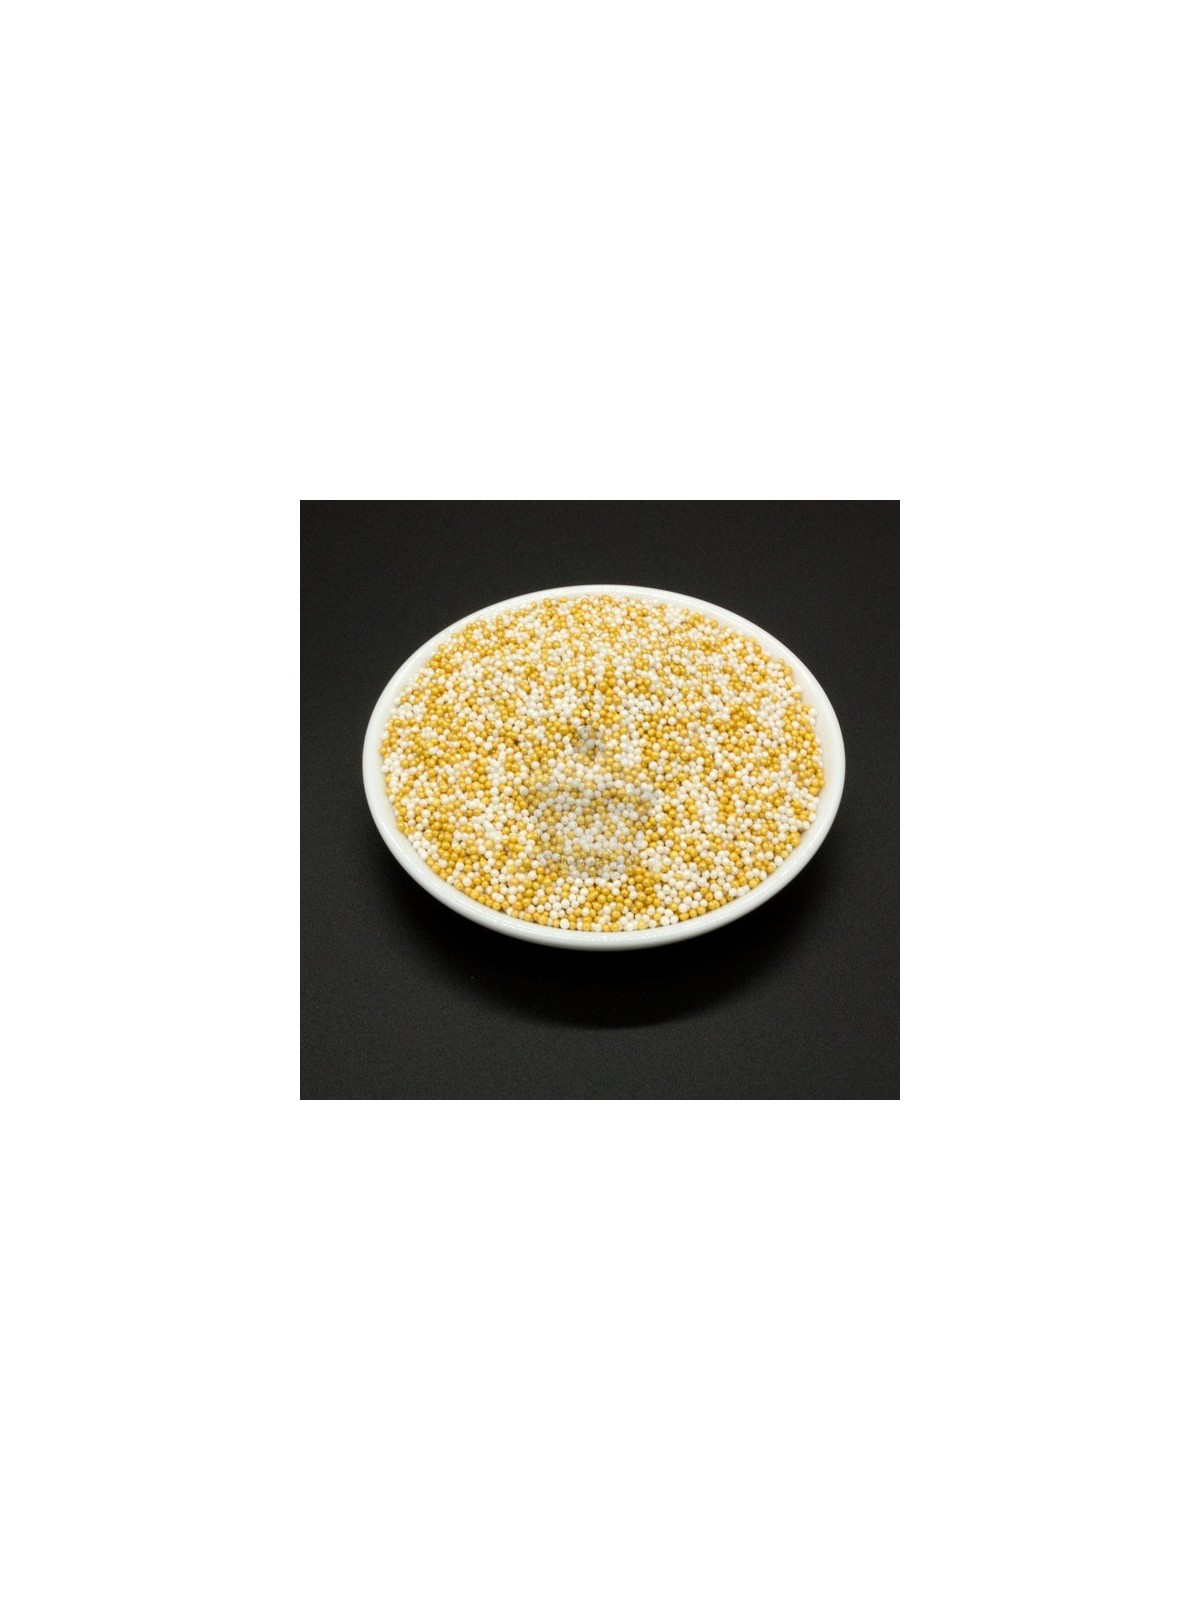 Cukrové perličky - máček zlatý / perleťový - 100g